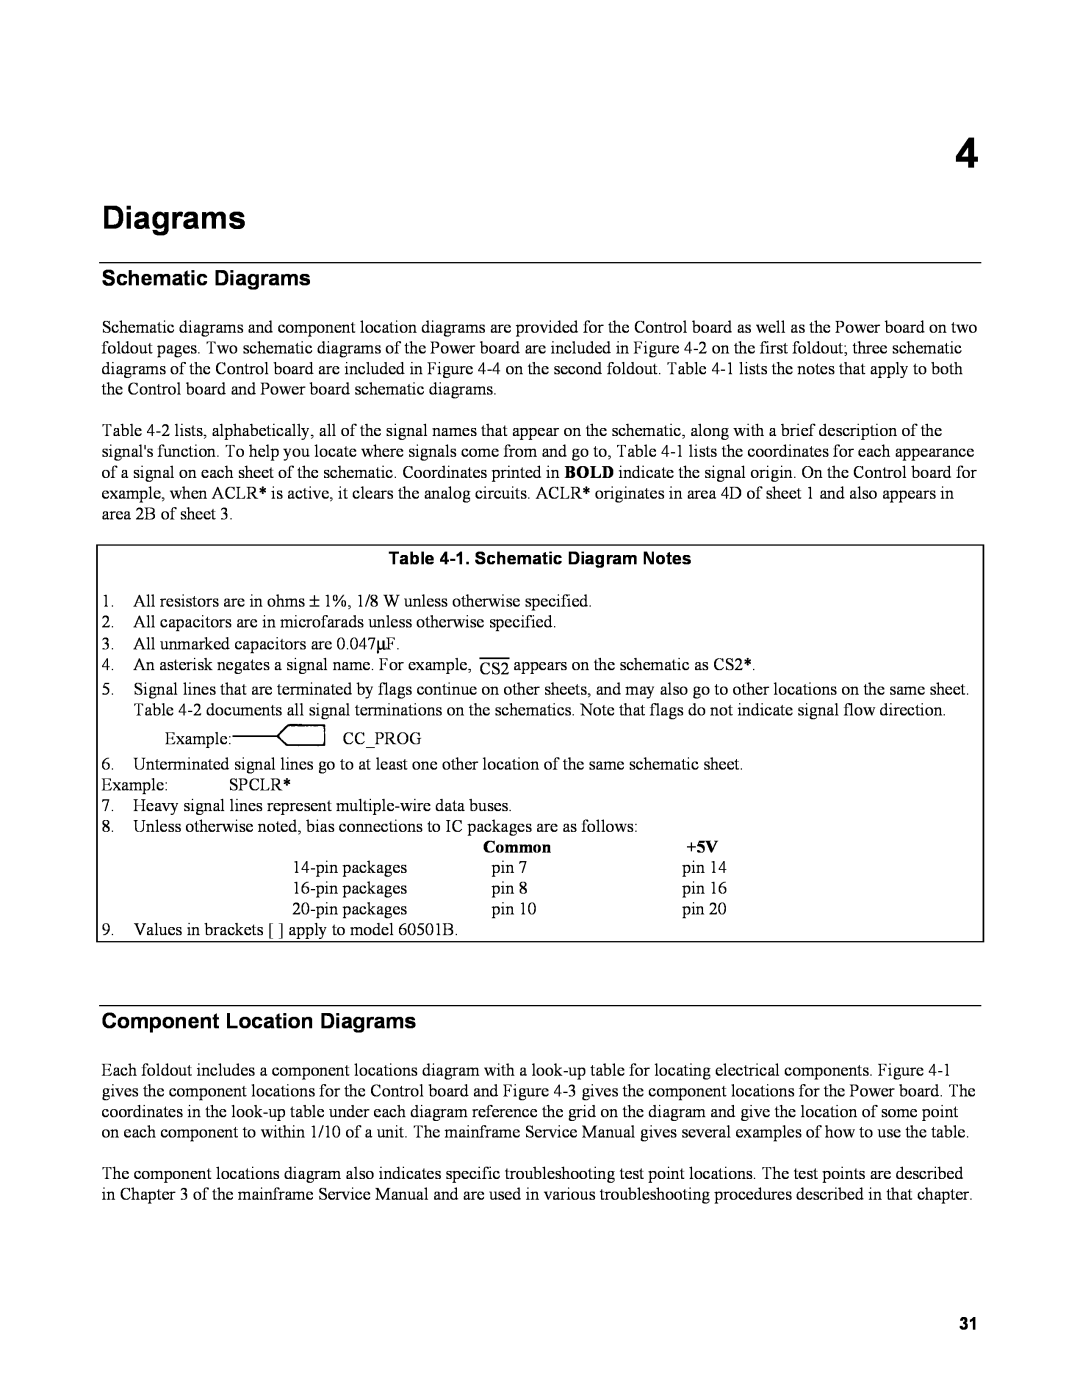 Agilent Technologies 60502B, 60501B service manual Schematic Diagrams, 1. Schematic Diagram Notes 